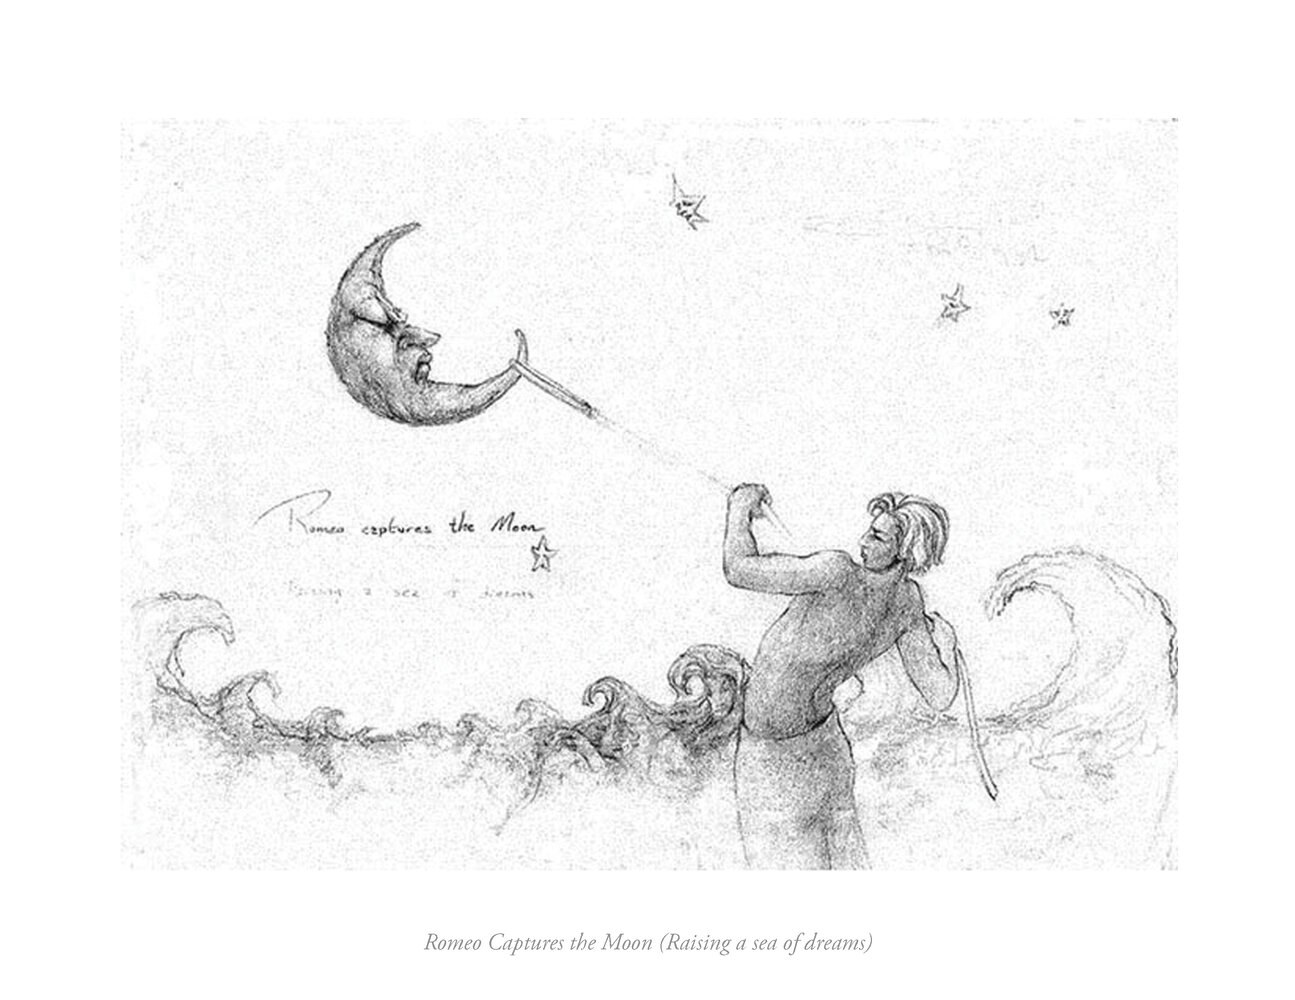 24.Romeo Captures the Moon (Raising a sea of dreams).jpg